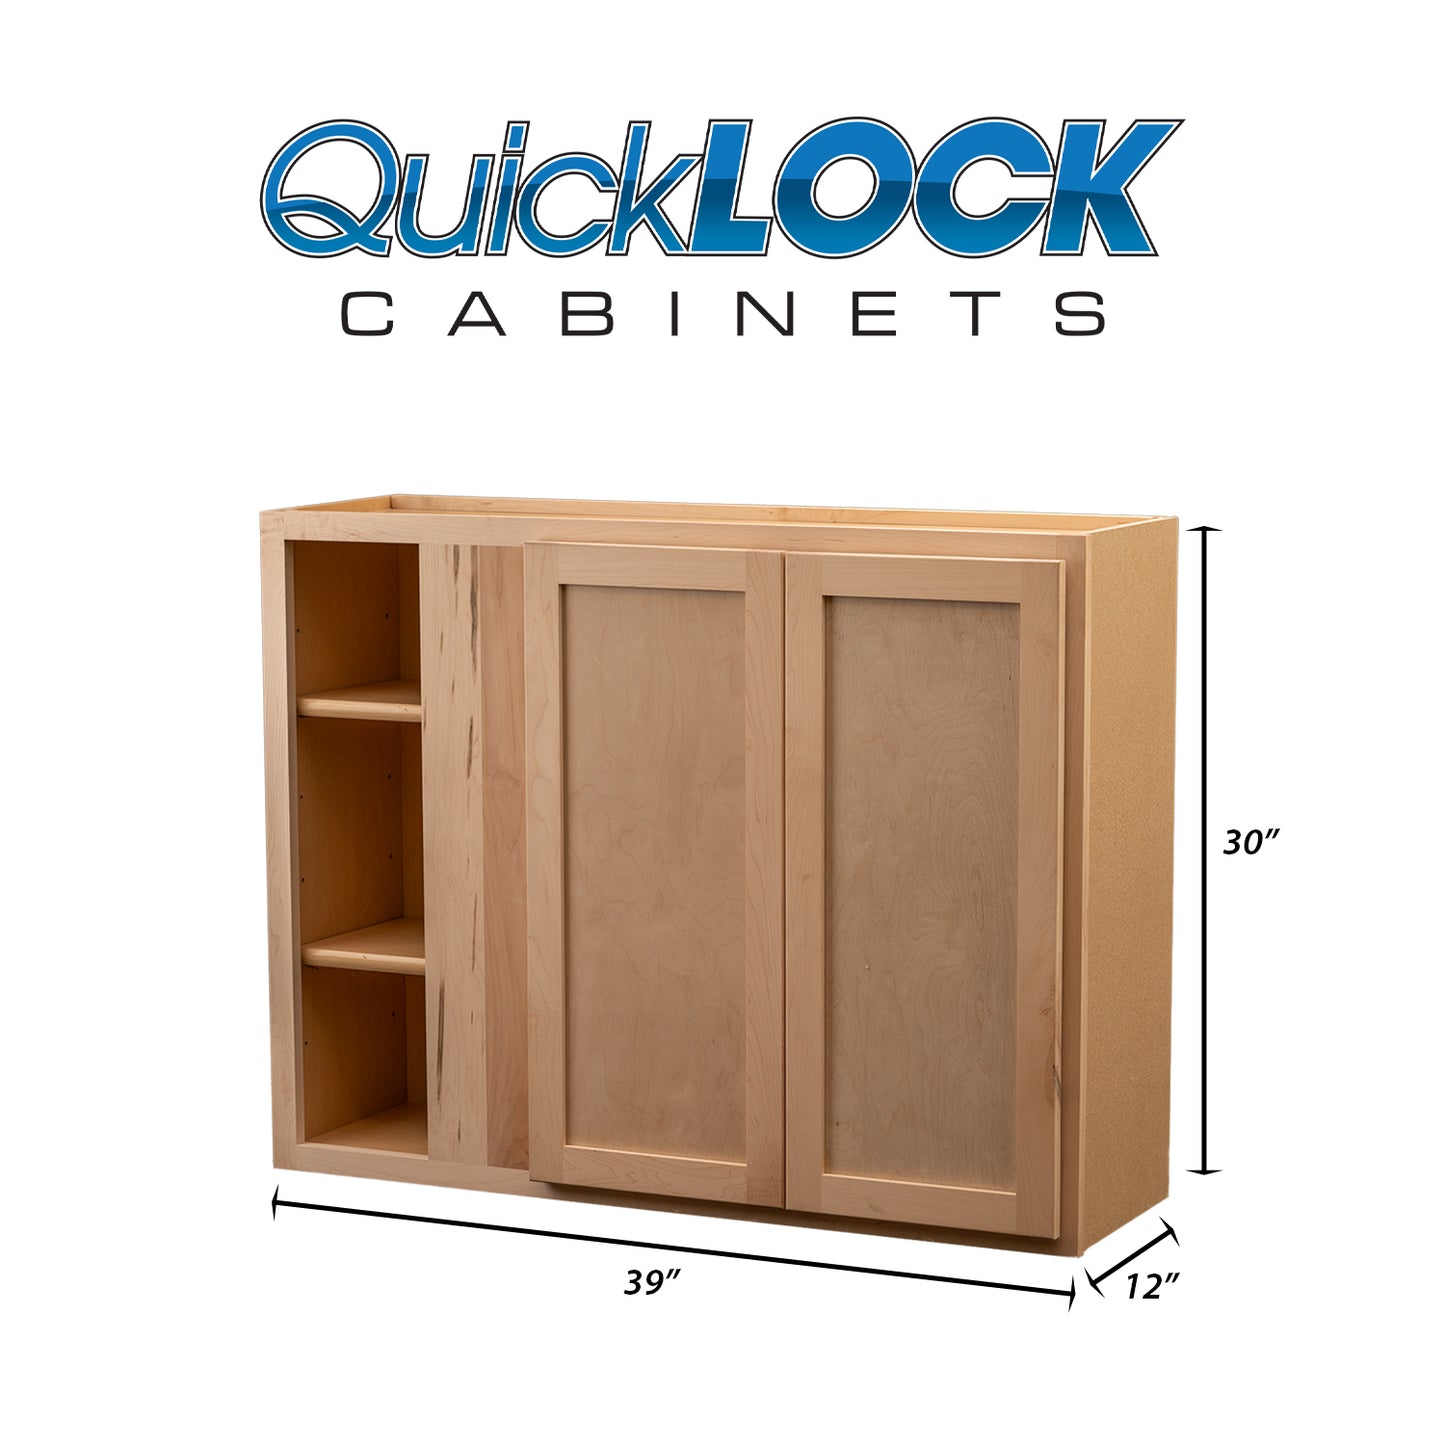 Quicklock RTA (Ready-to-Assemble) Raw Maple 39"Wx30"Hx12"D Blind Corner Wall Cabinet